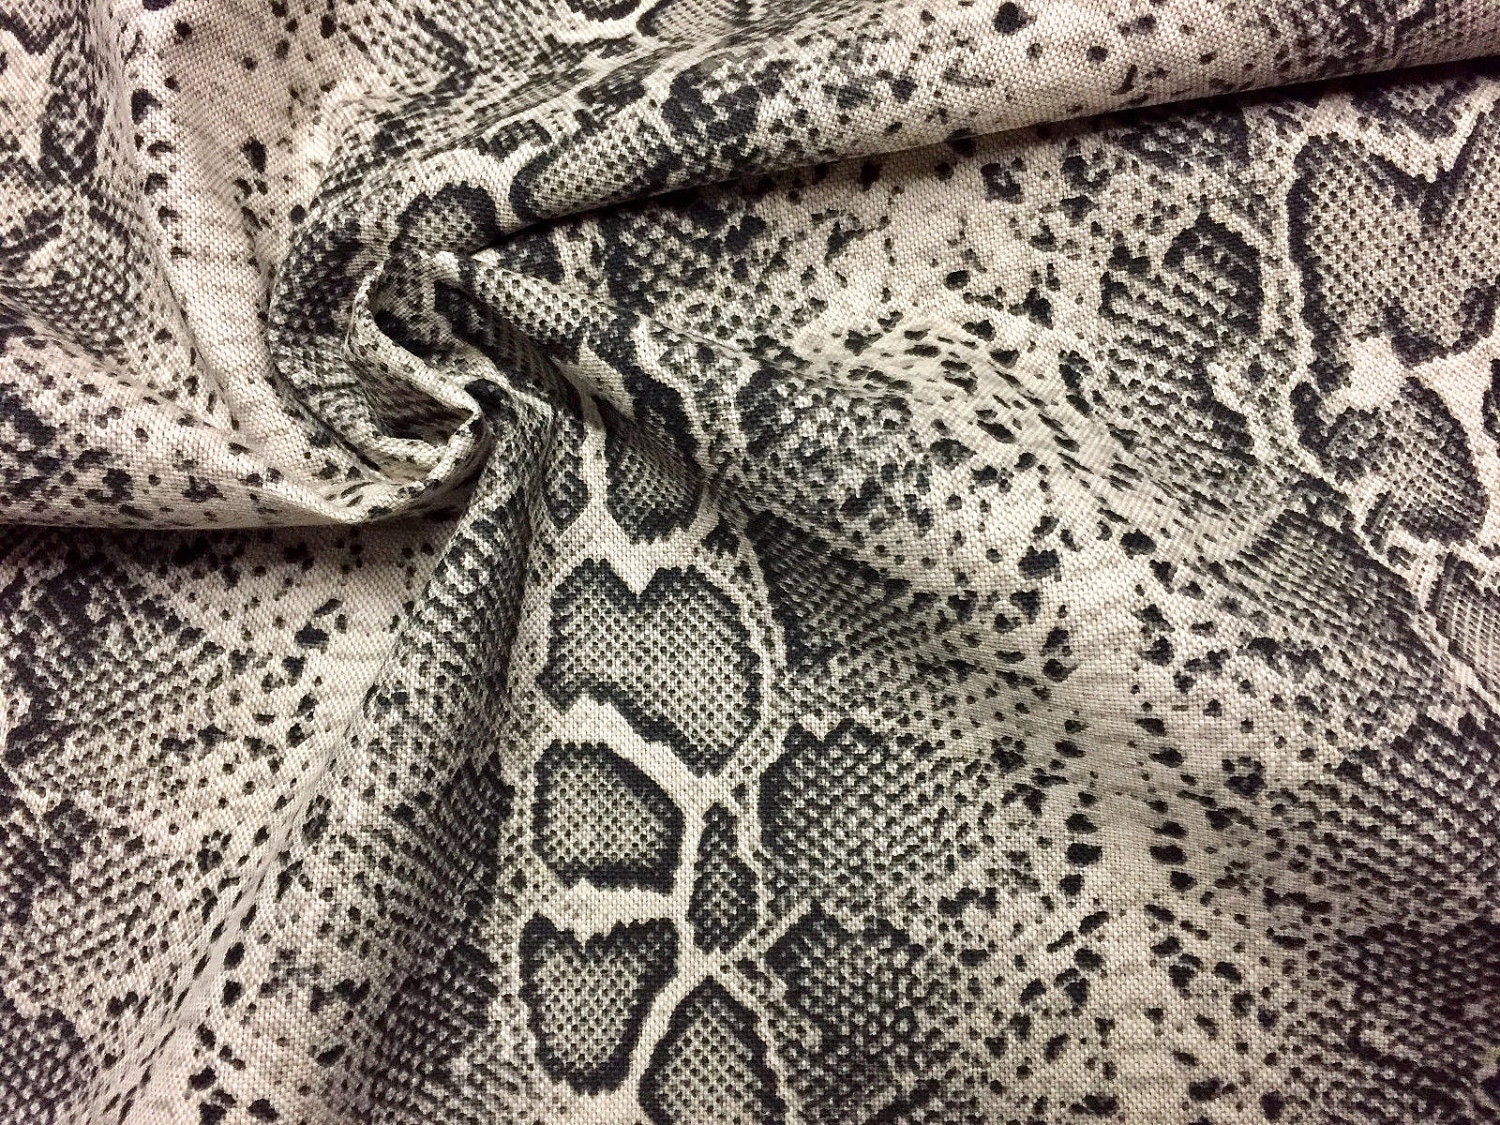 Snake Skin Python Animal Print Fabric Linen Look Cotton Blend - Etsy